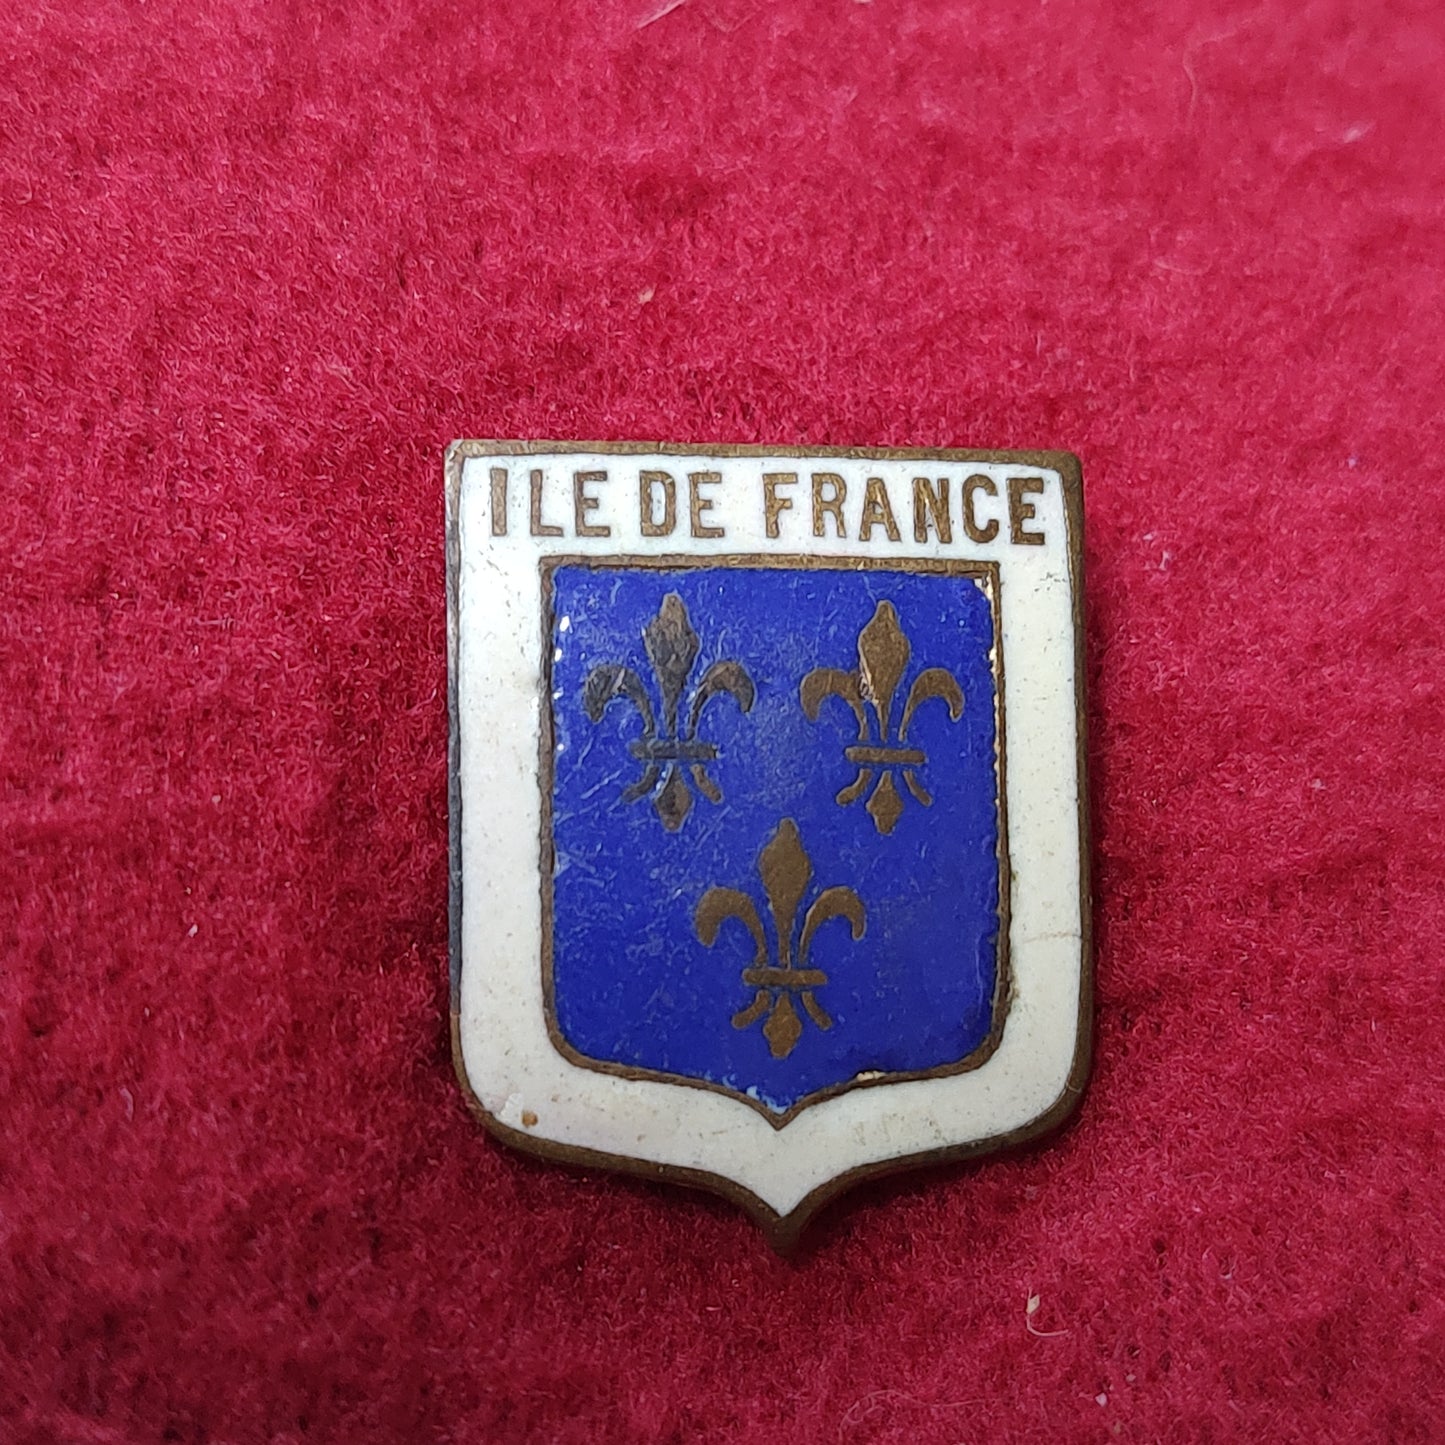 VINTAGE US Army ILE DE FRANCE Badge Pin (19CR44)